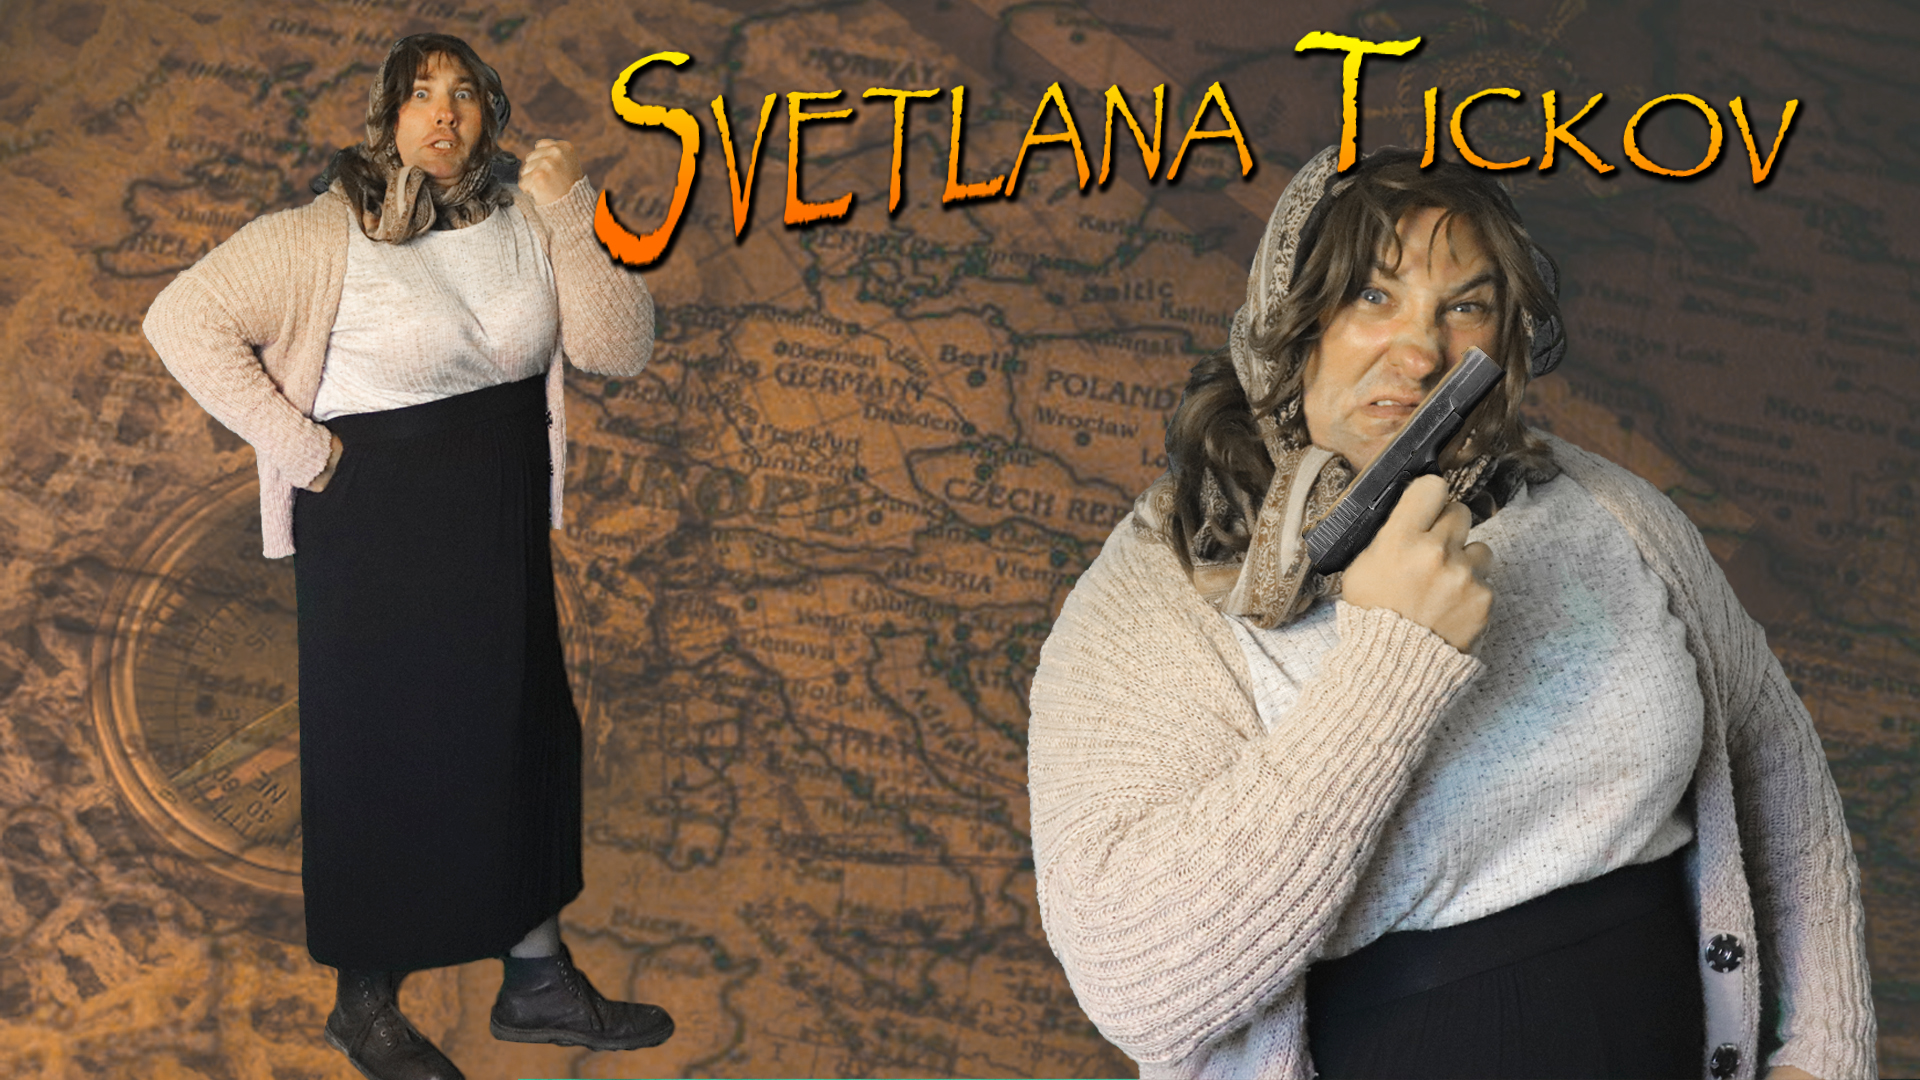 Dustin Heavilin as Svetlana Tickov